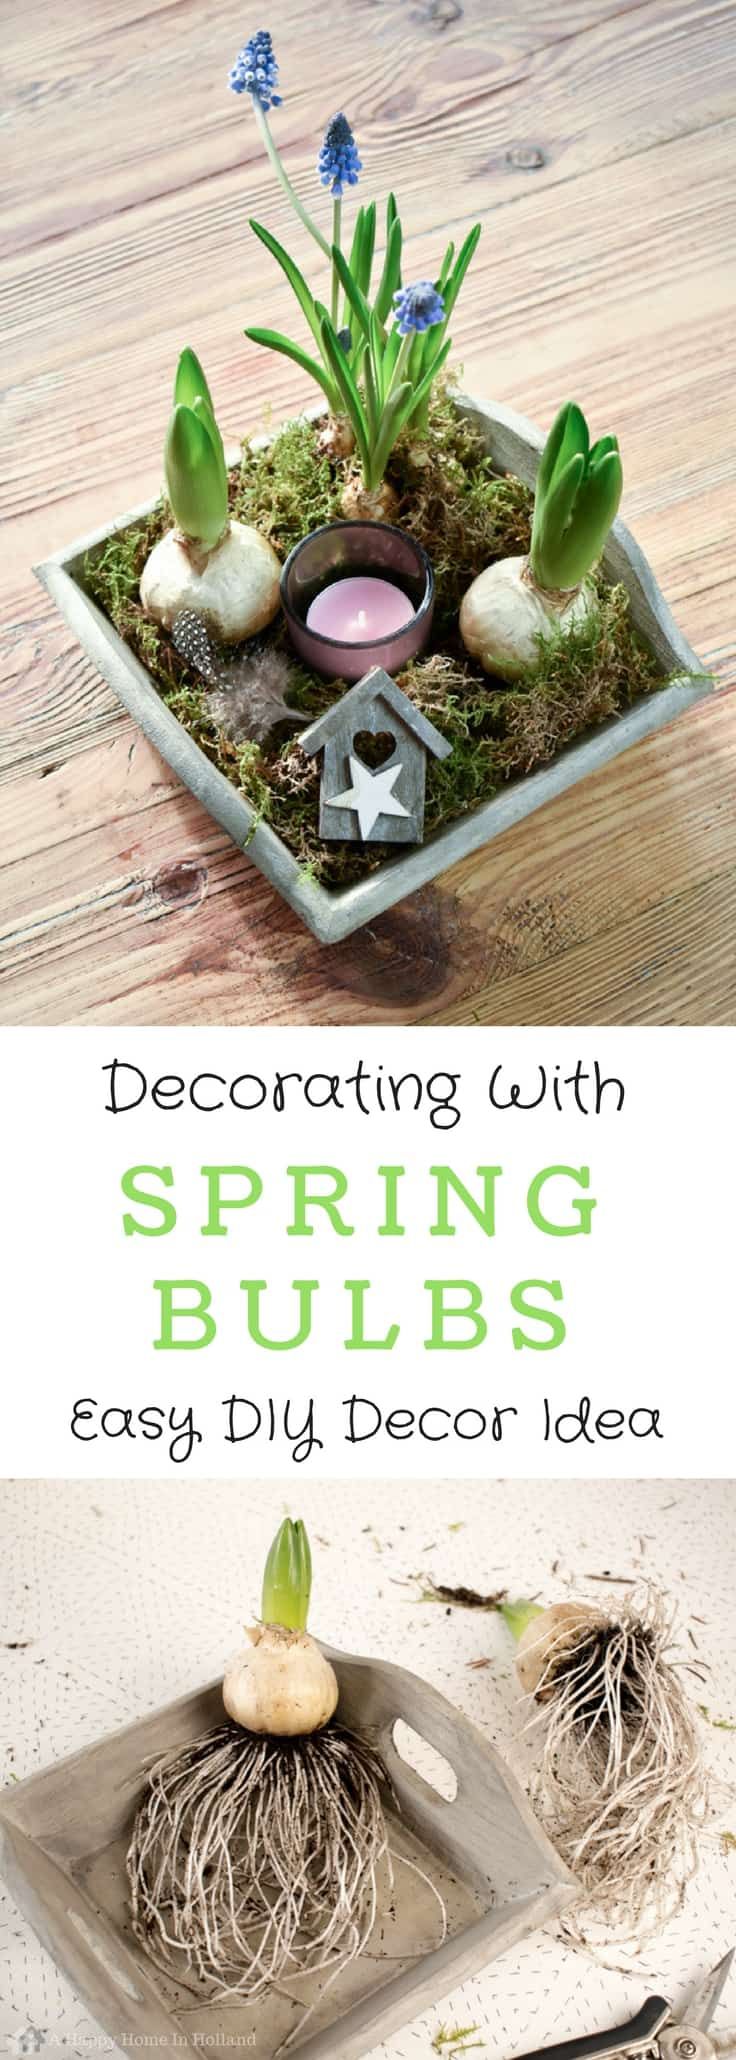 Decorating With Spring Bulbs: Simple Hyacinth & Muscari Display Idea